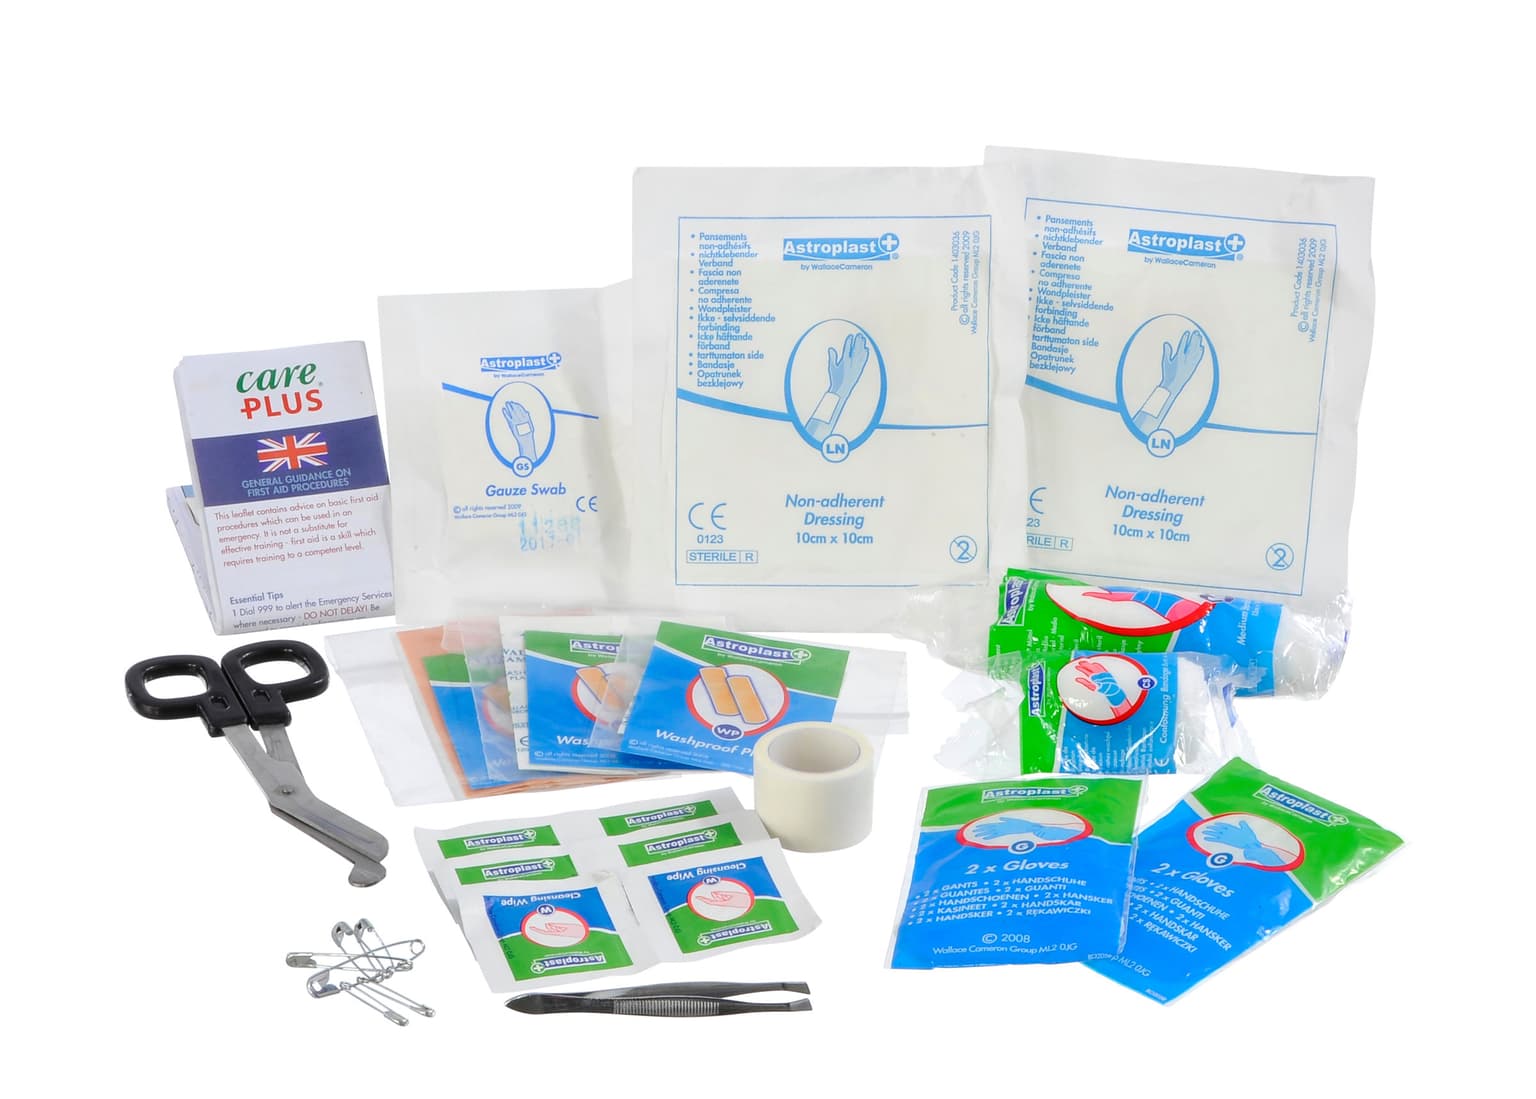 Care Plus Care Plus First Aid Kit Compact Erste Hilfe Set 3